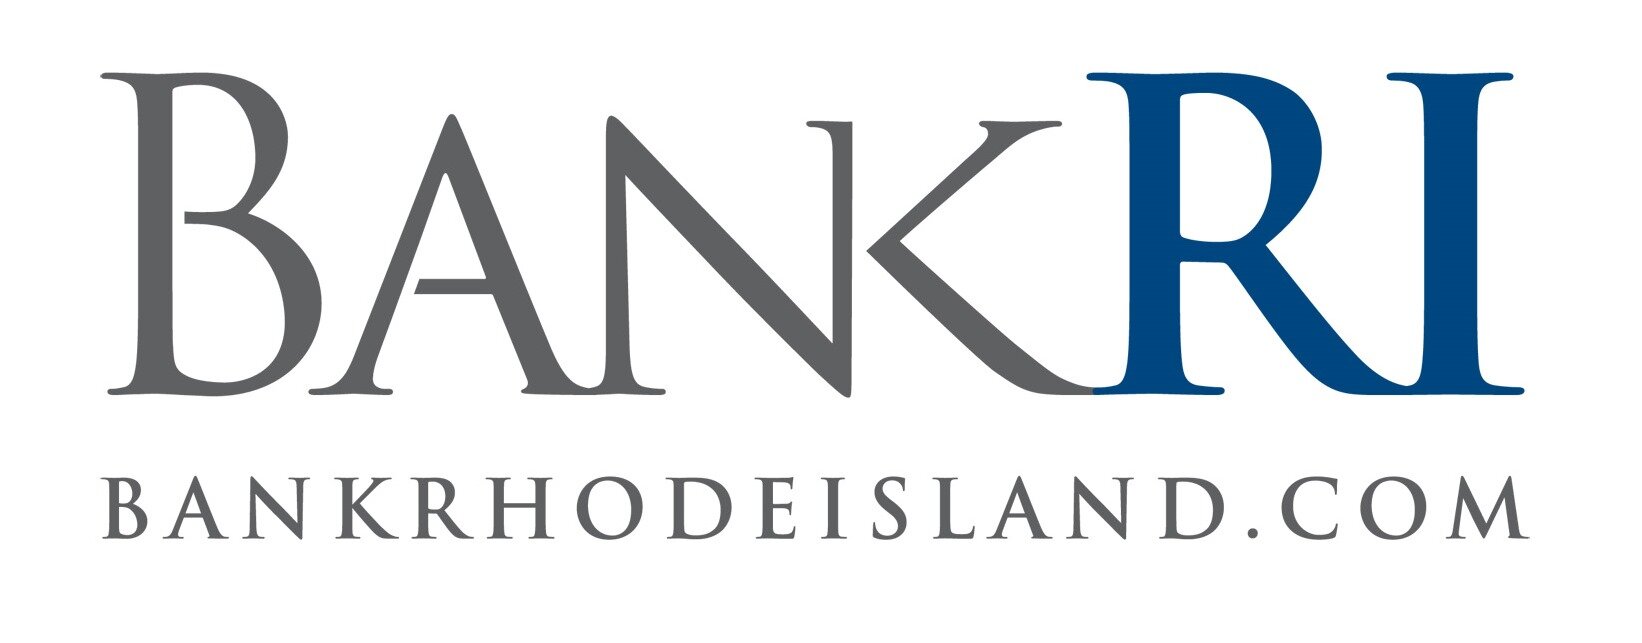 BankRI_logo (2).jpg